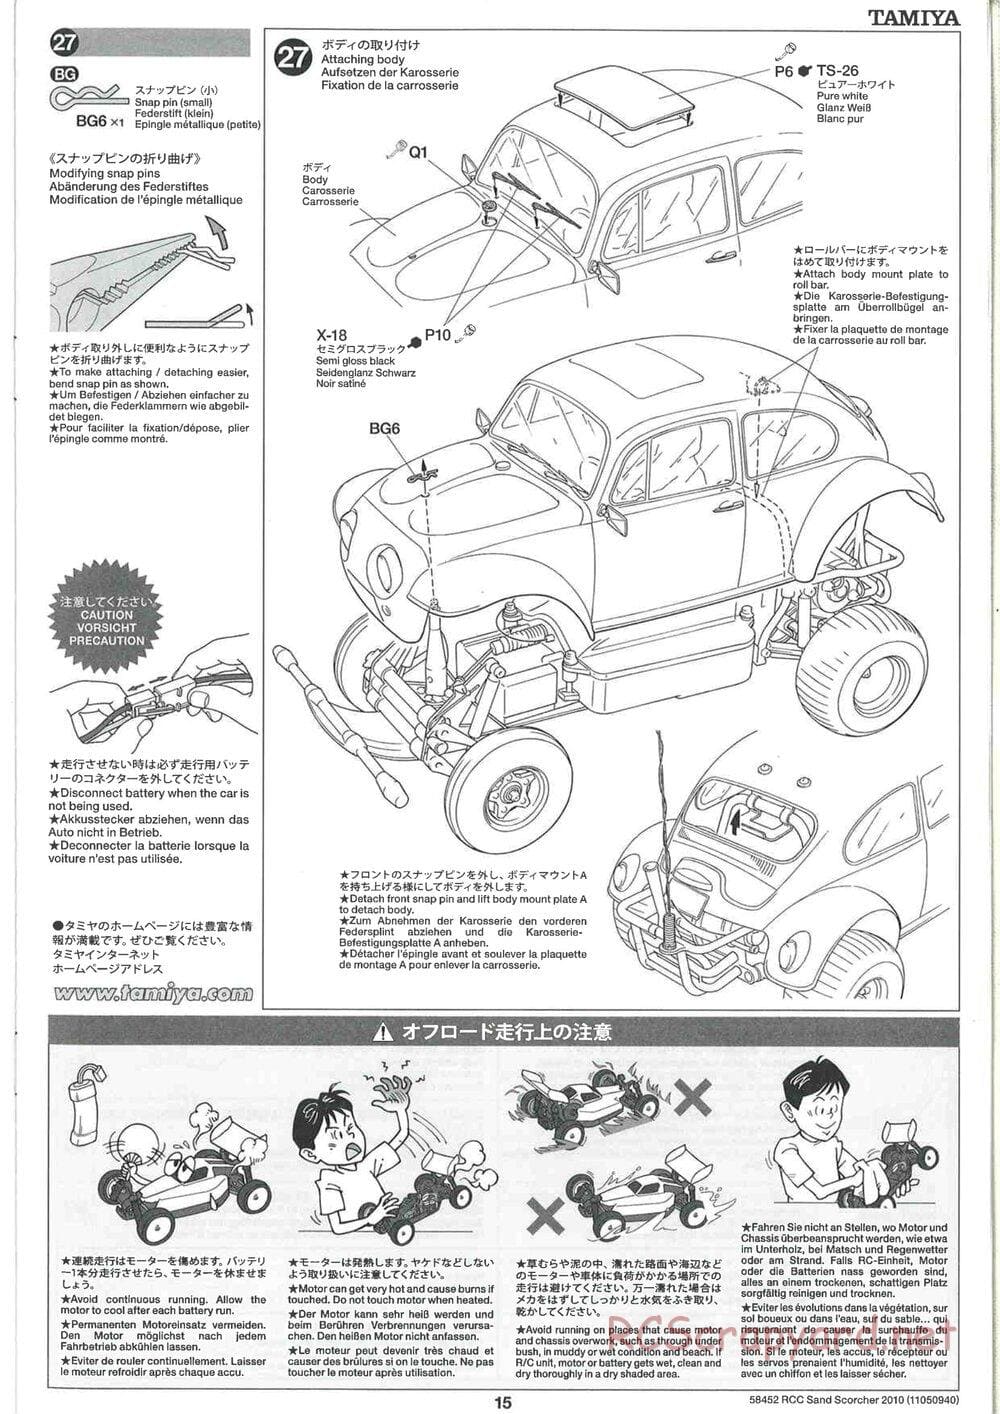 Tamiya - Sand Scorcher 2010 - SRB v1 Chassis - Manual - Page 15